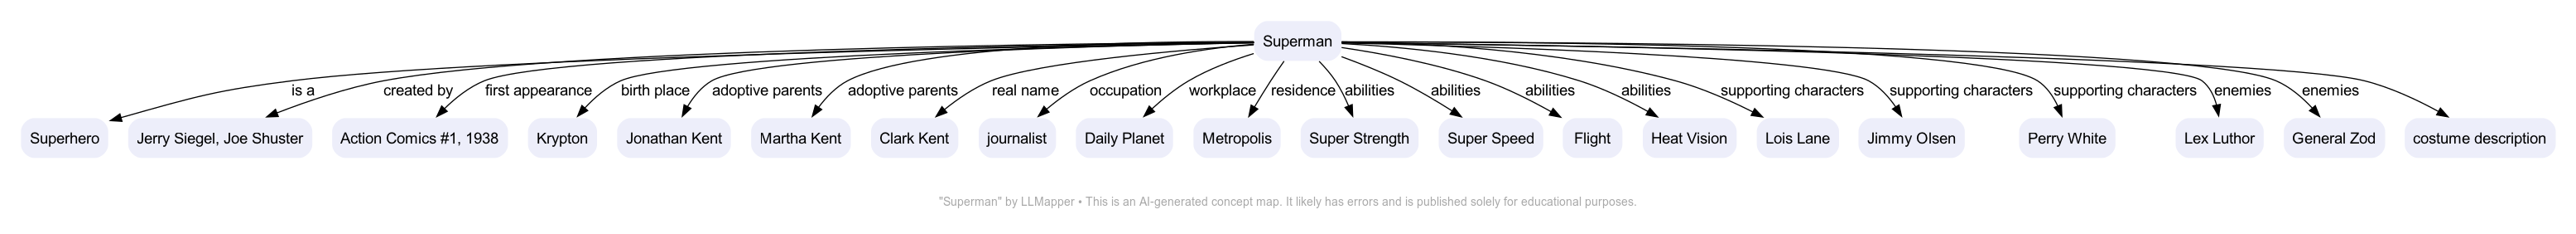 Superman - A concept map by LLMapper